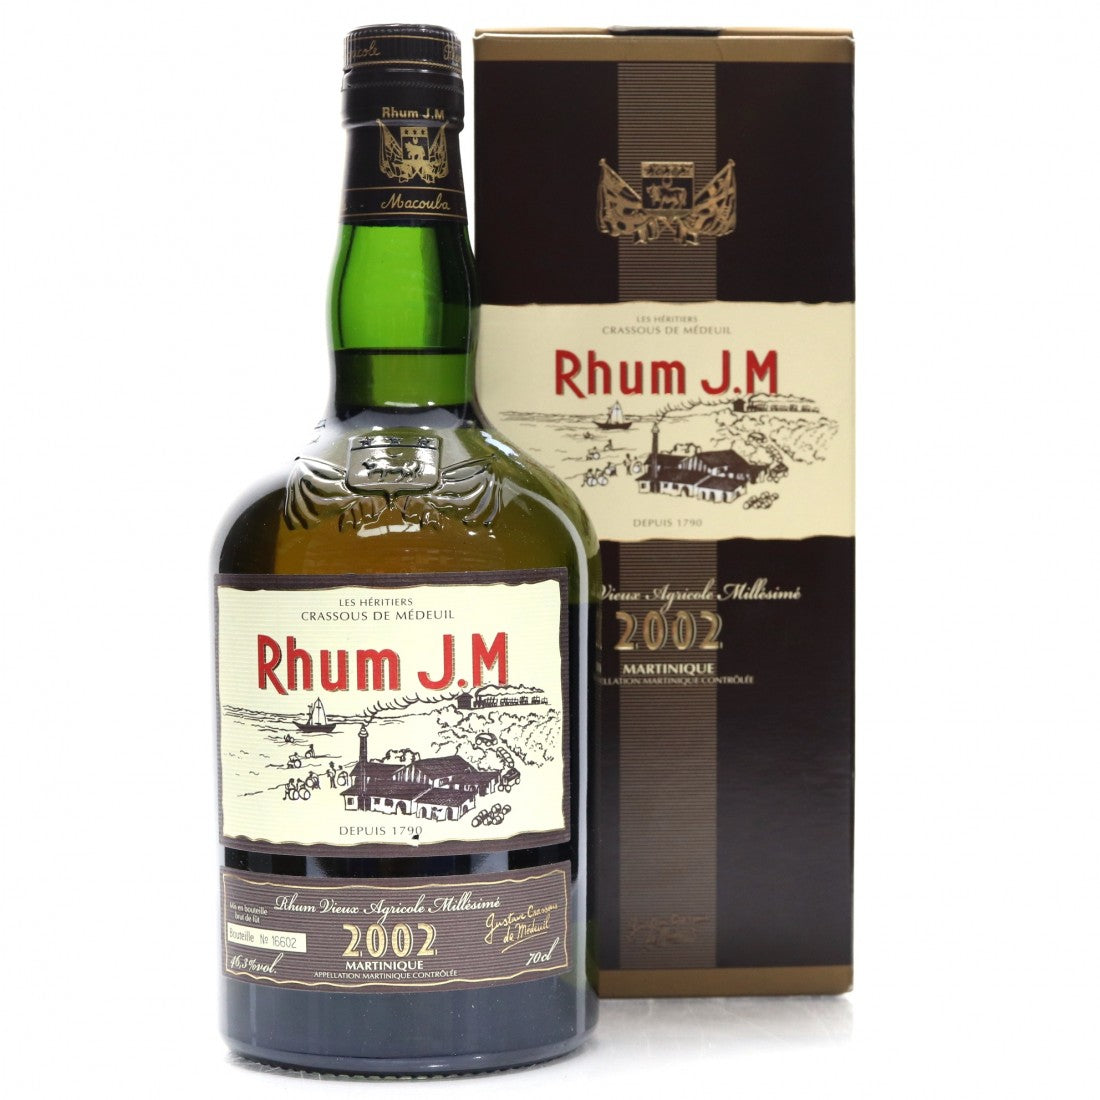 BUY] Rhum J.M. Martinique Distilled 2002 15 Year Old Rum at CaskCartel.com